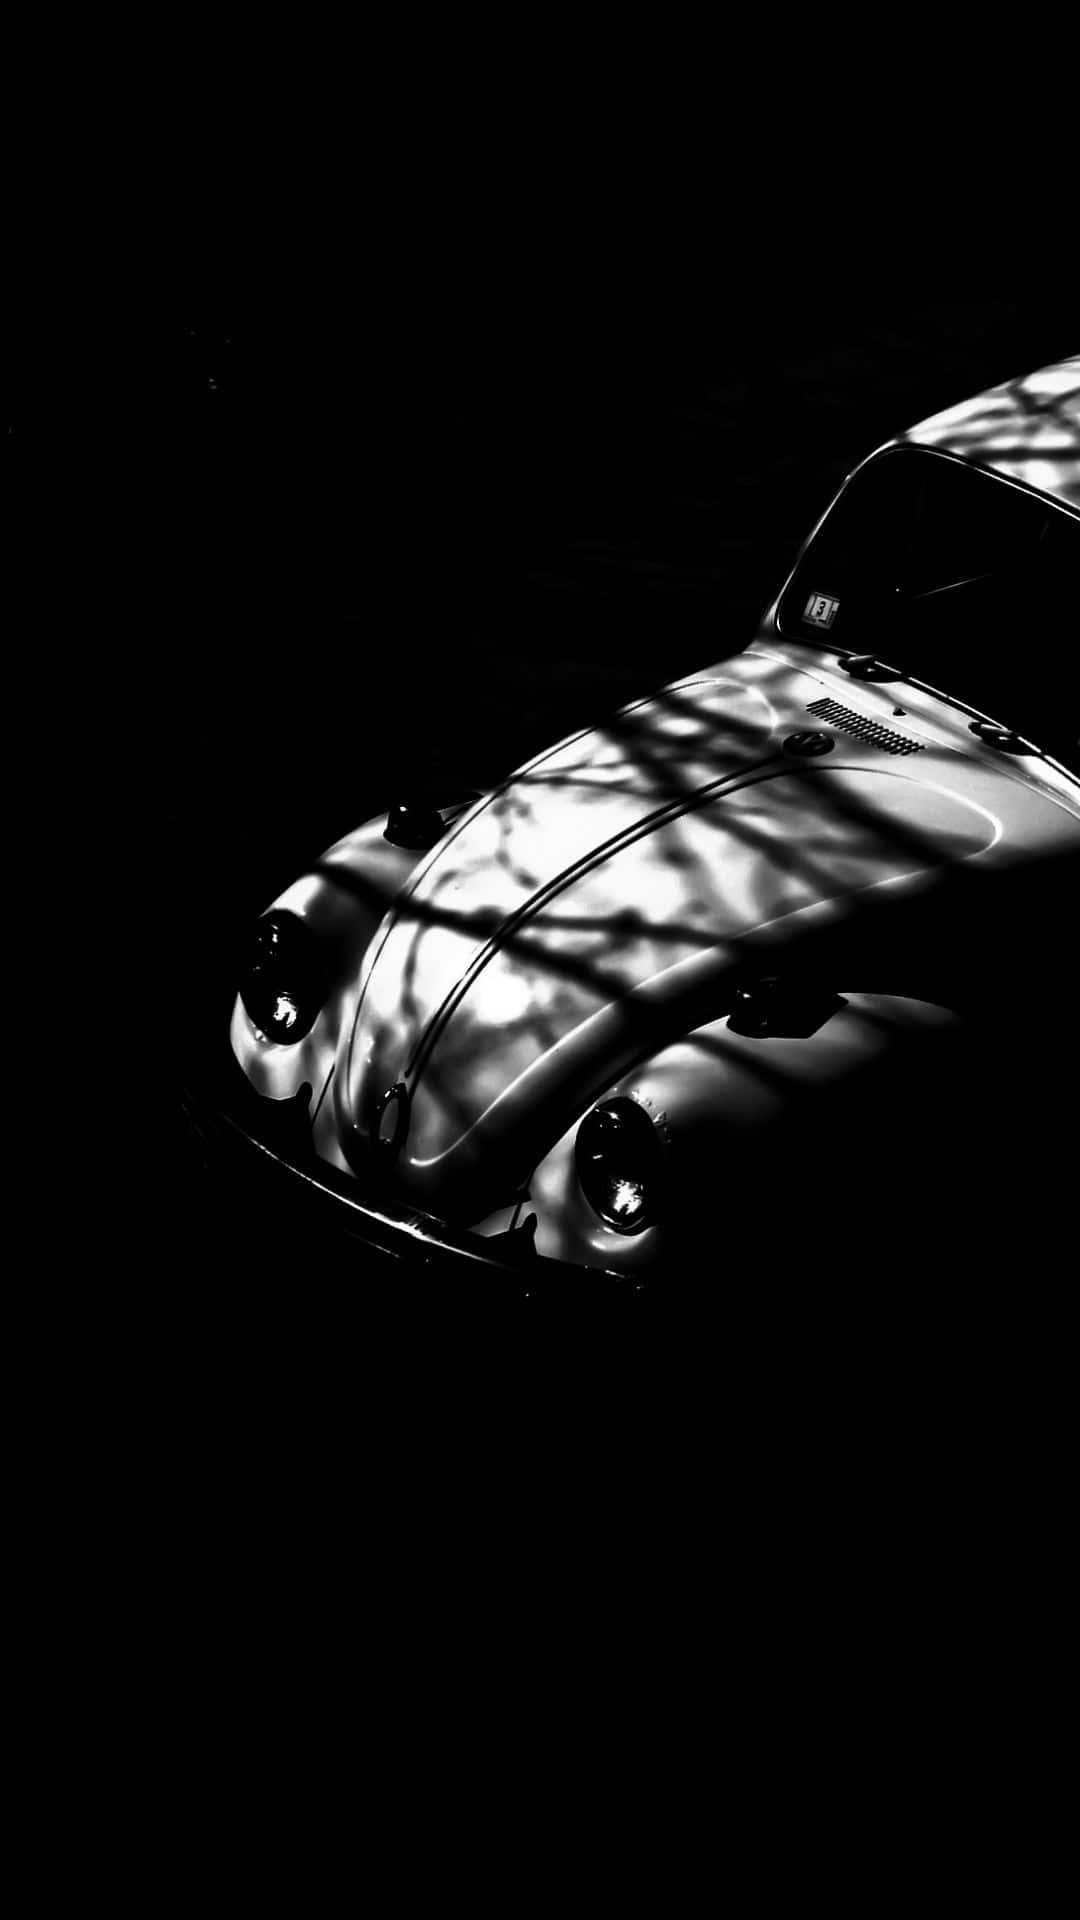 Caption: Stylish Black and White Car Wallpaper